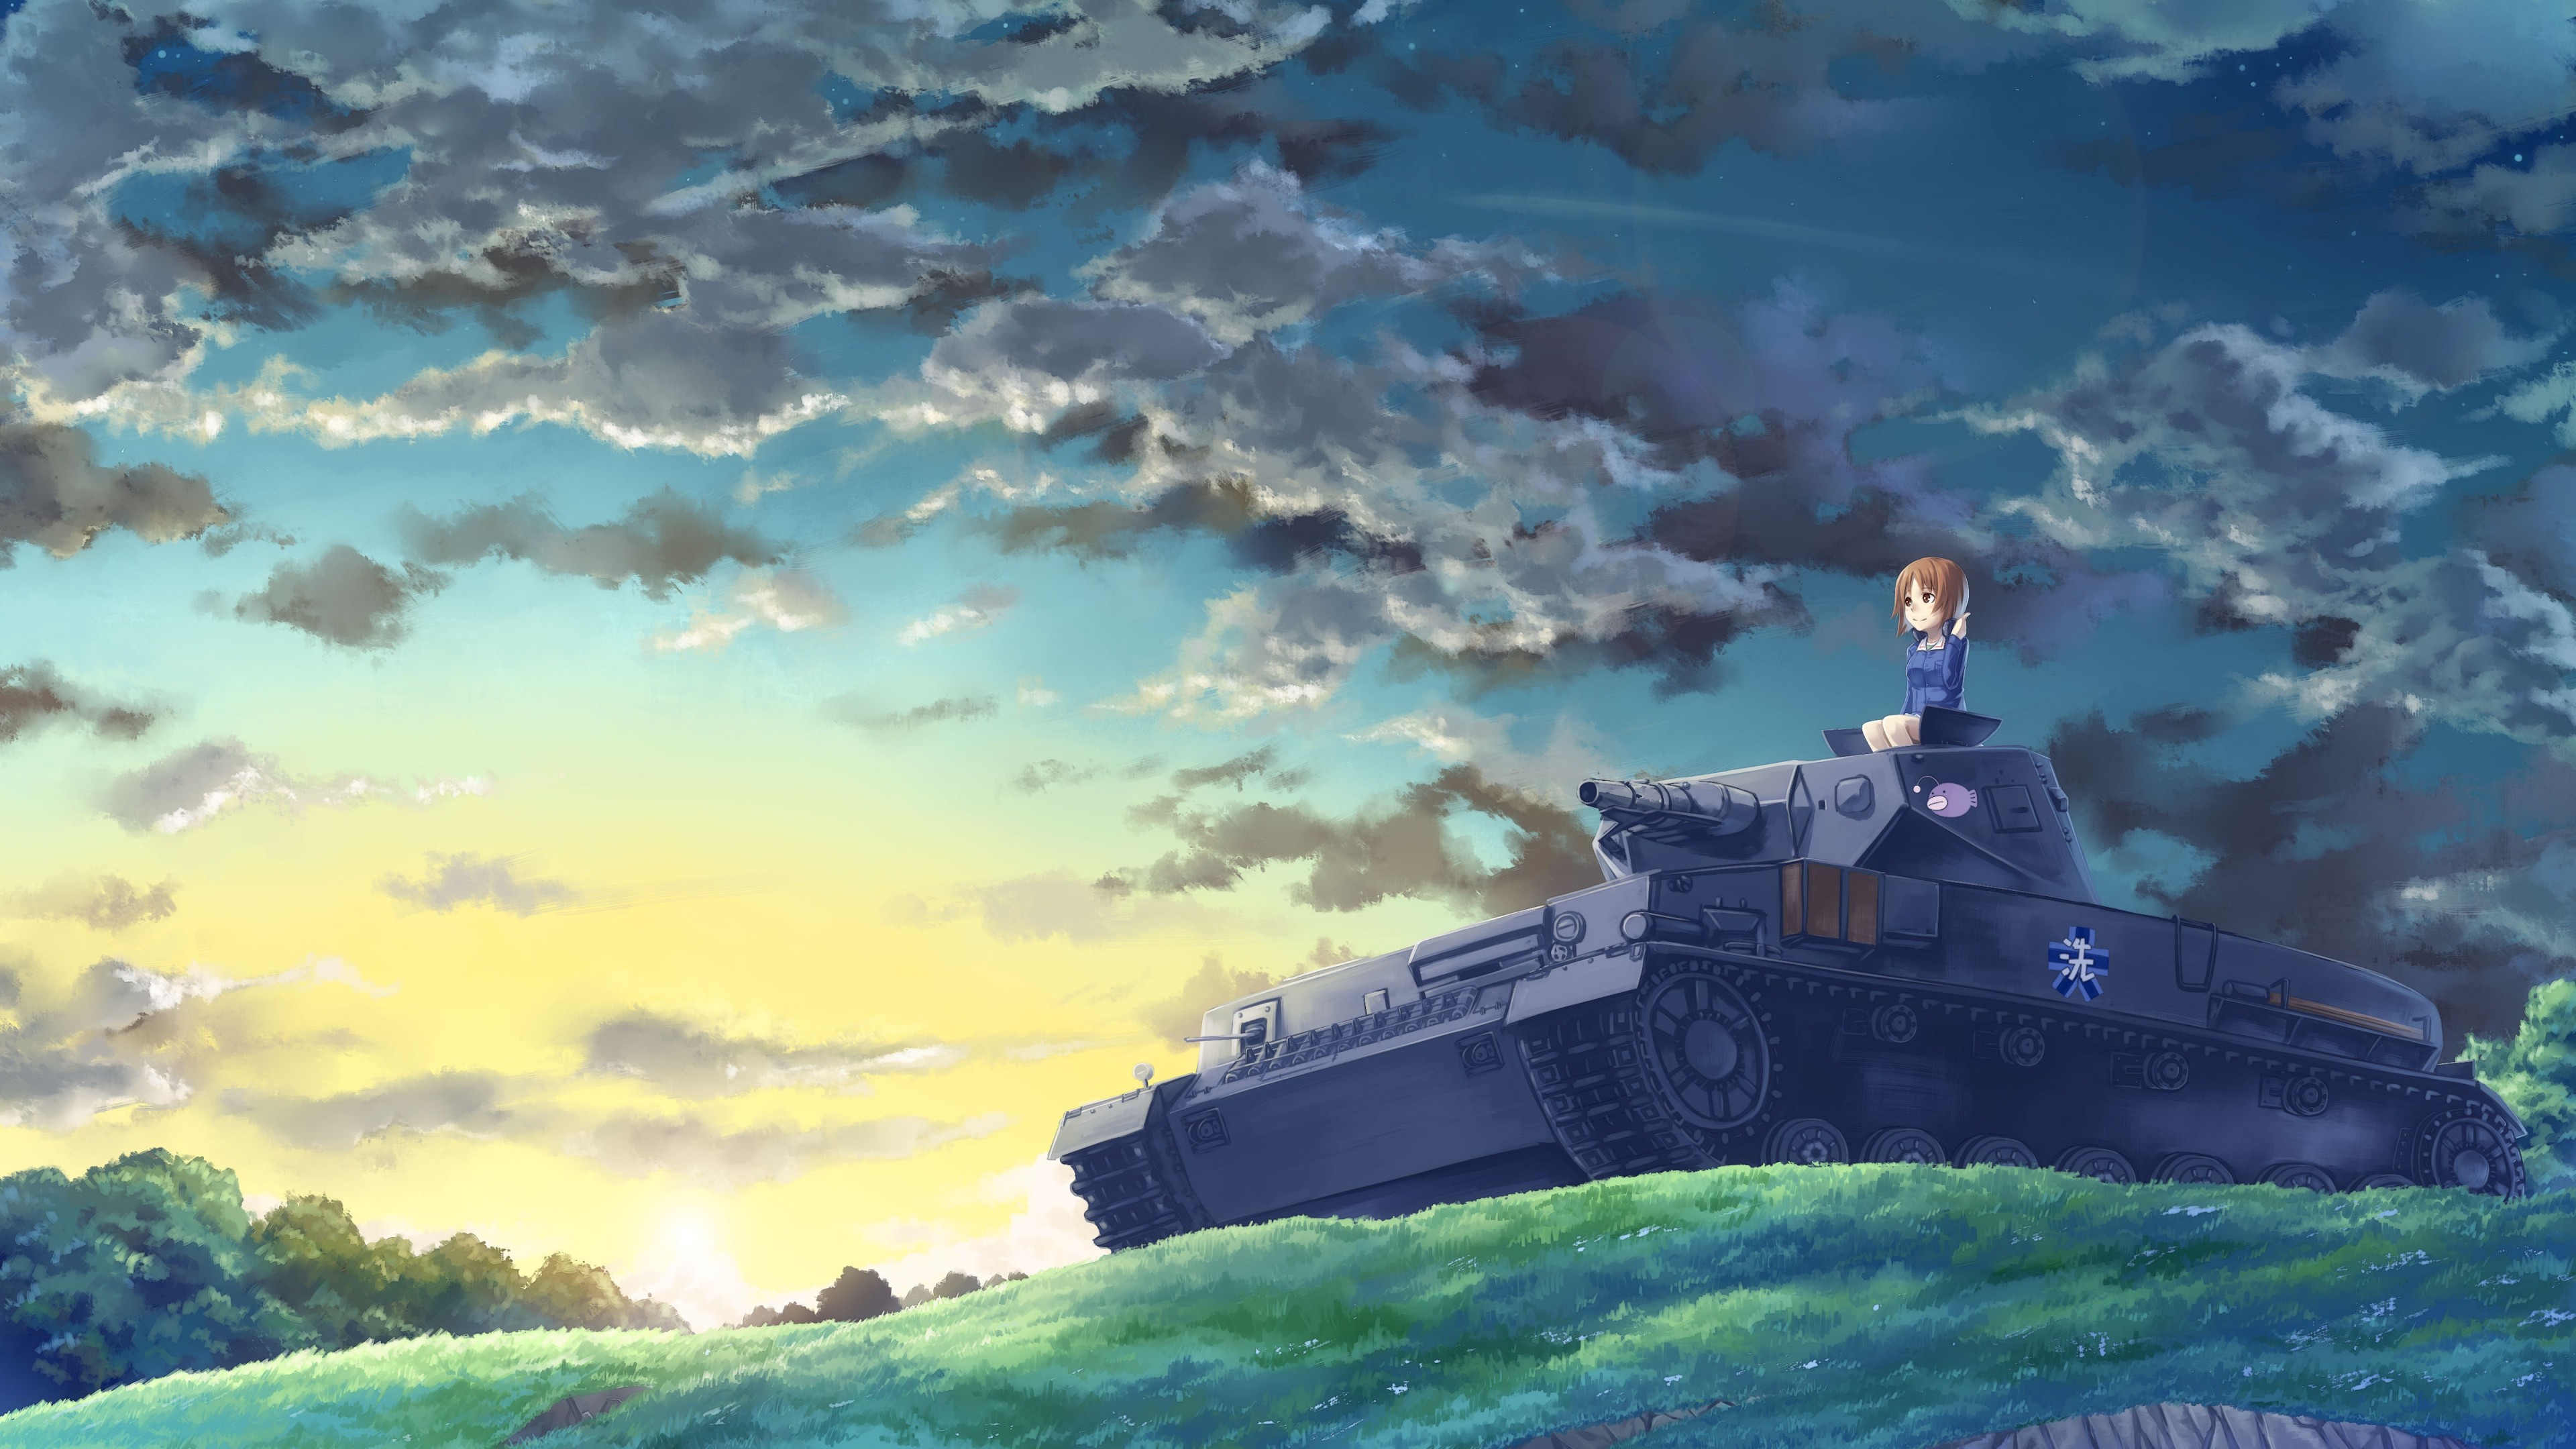 Anime 3840x2160 Girls und Panzer tank anime girls sunrise sky clouds anime vehicle military vehicle